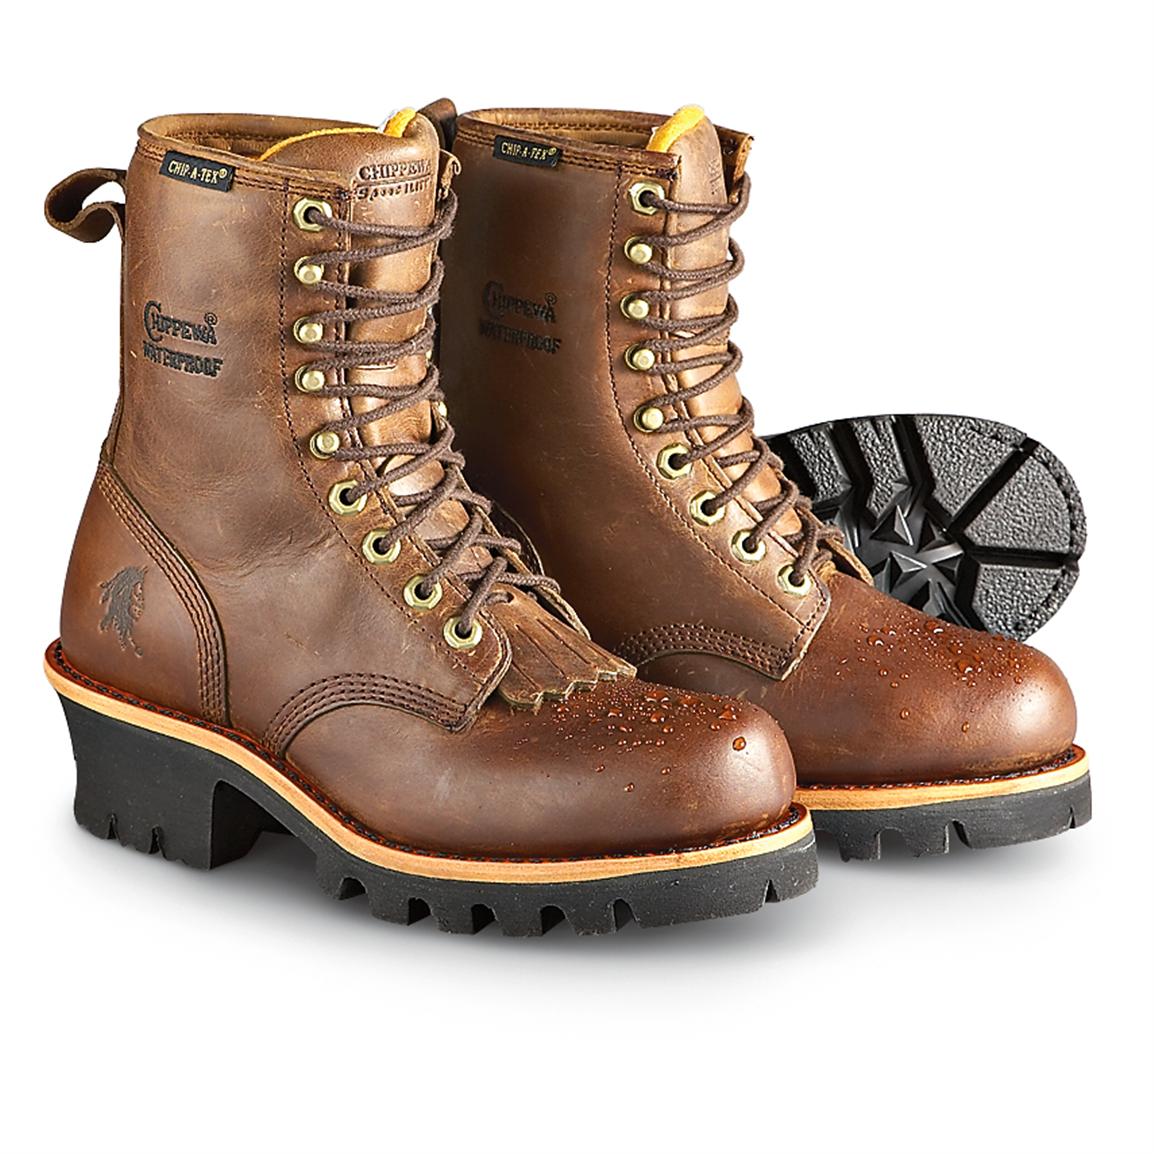 women's chippewa steel toe boots